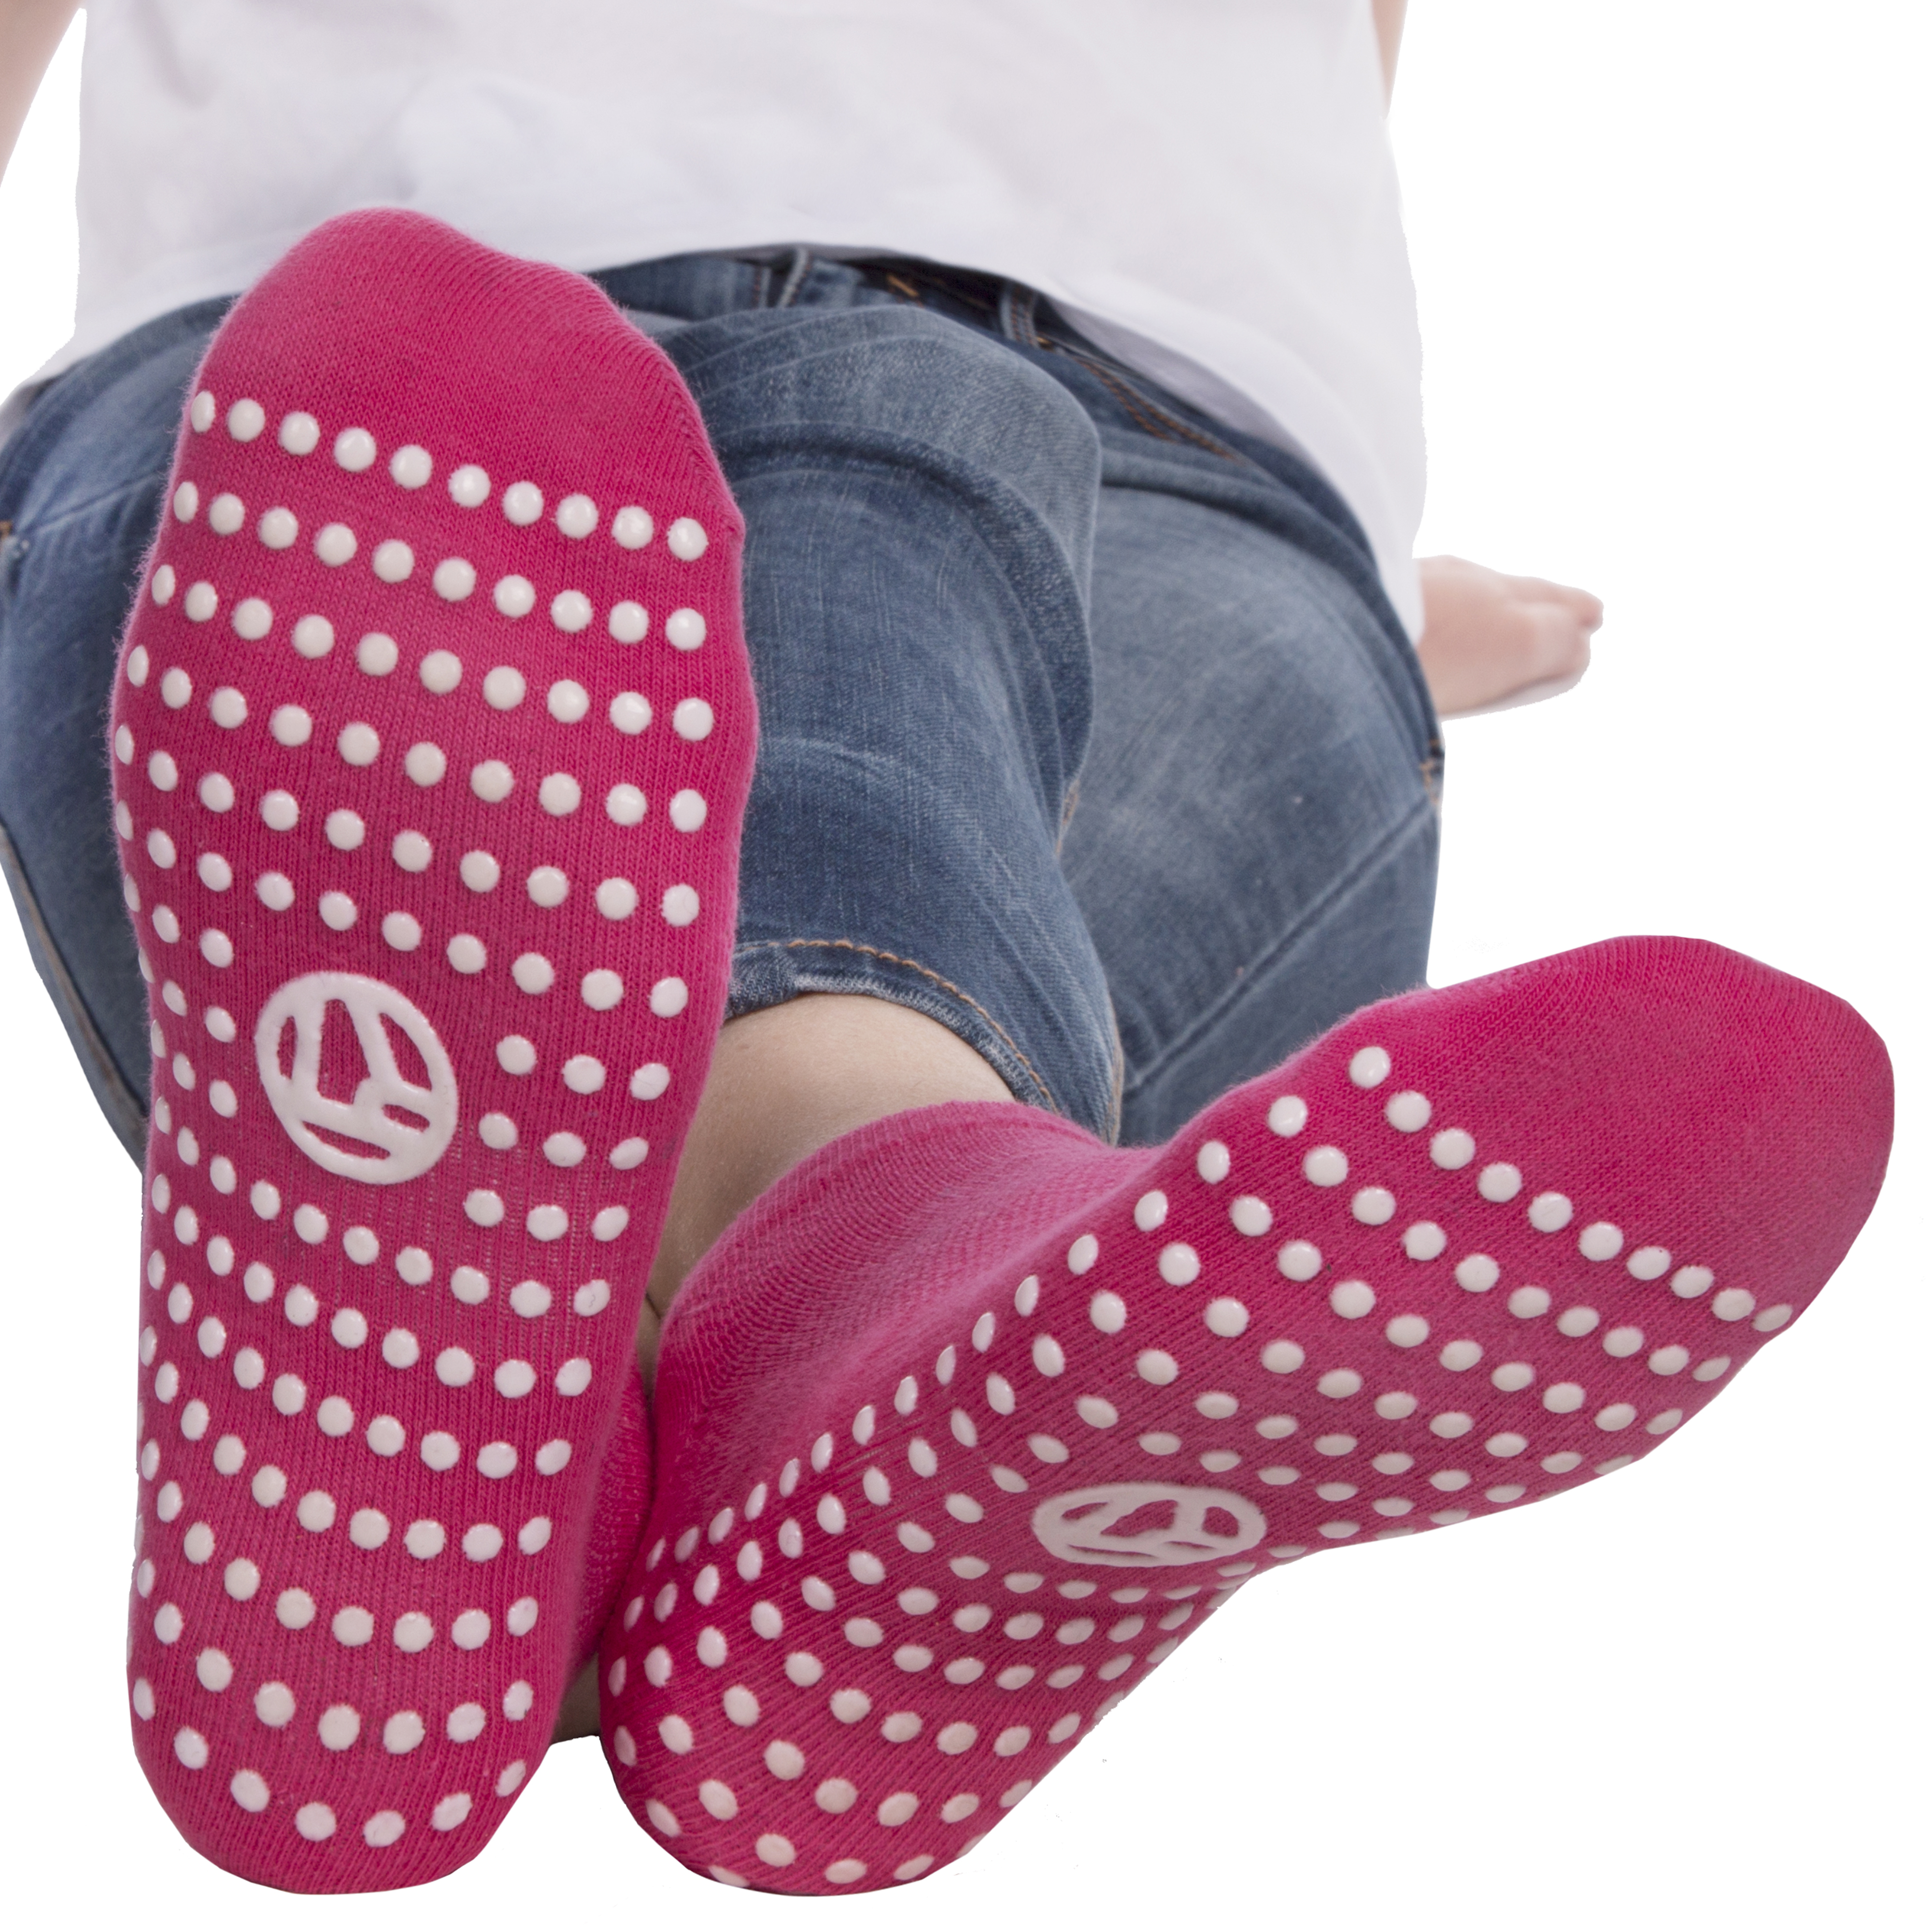 Redtag Ladies Non Slip Gripper Gym Yoga Trainer Liner Socks 3 Pack Size 4-8 